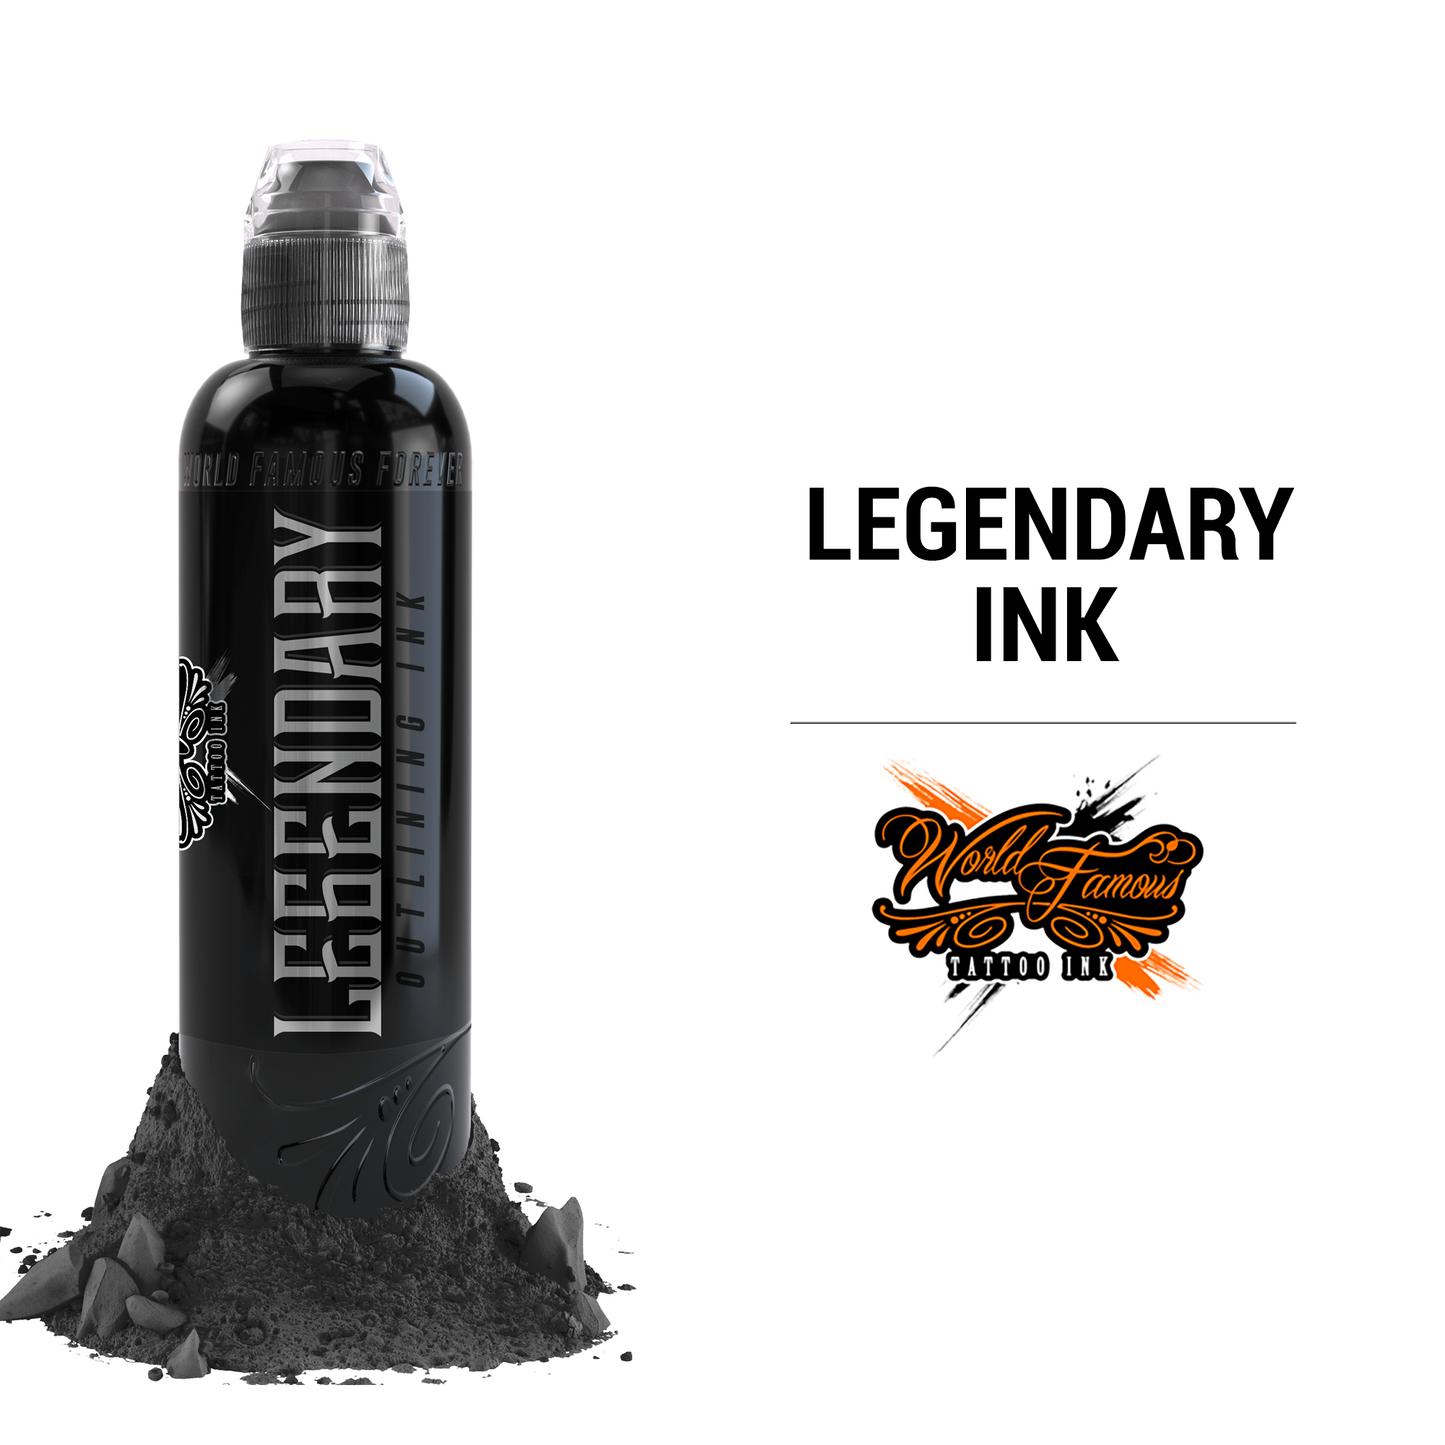 Legendary Ink | World Famous Tattoo Ink